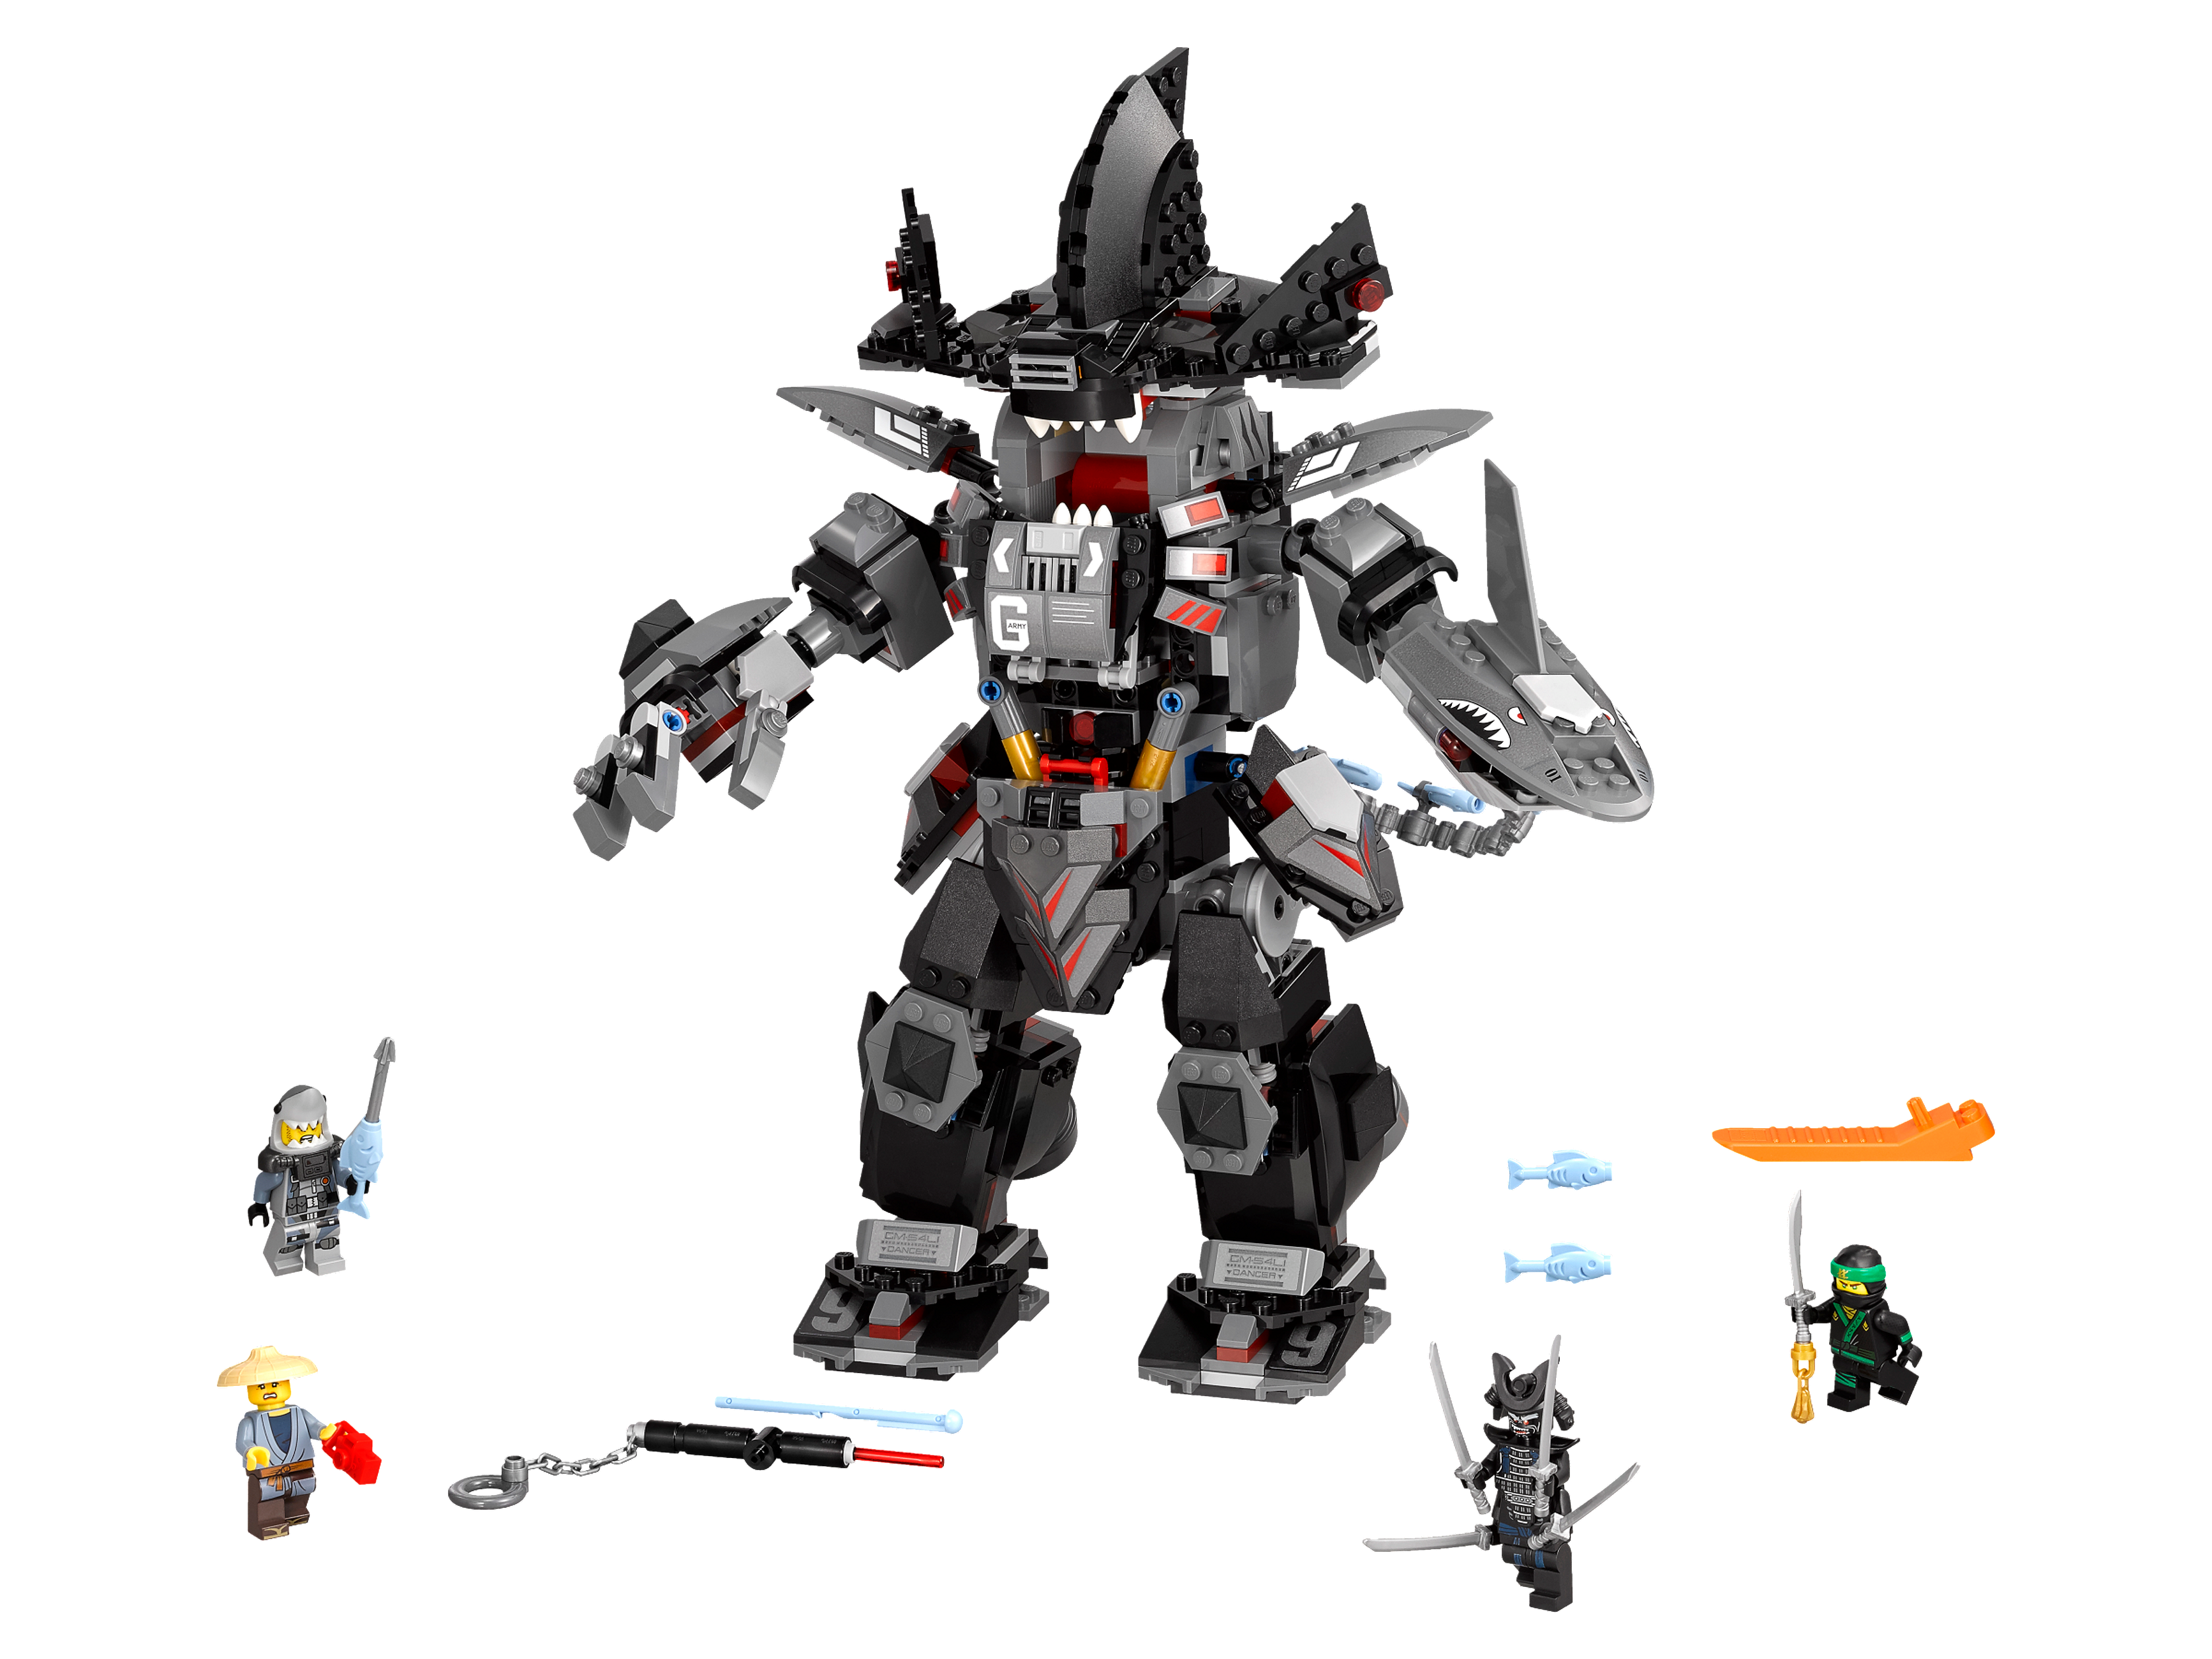 LEGO 70617 Состав набора